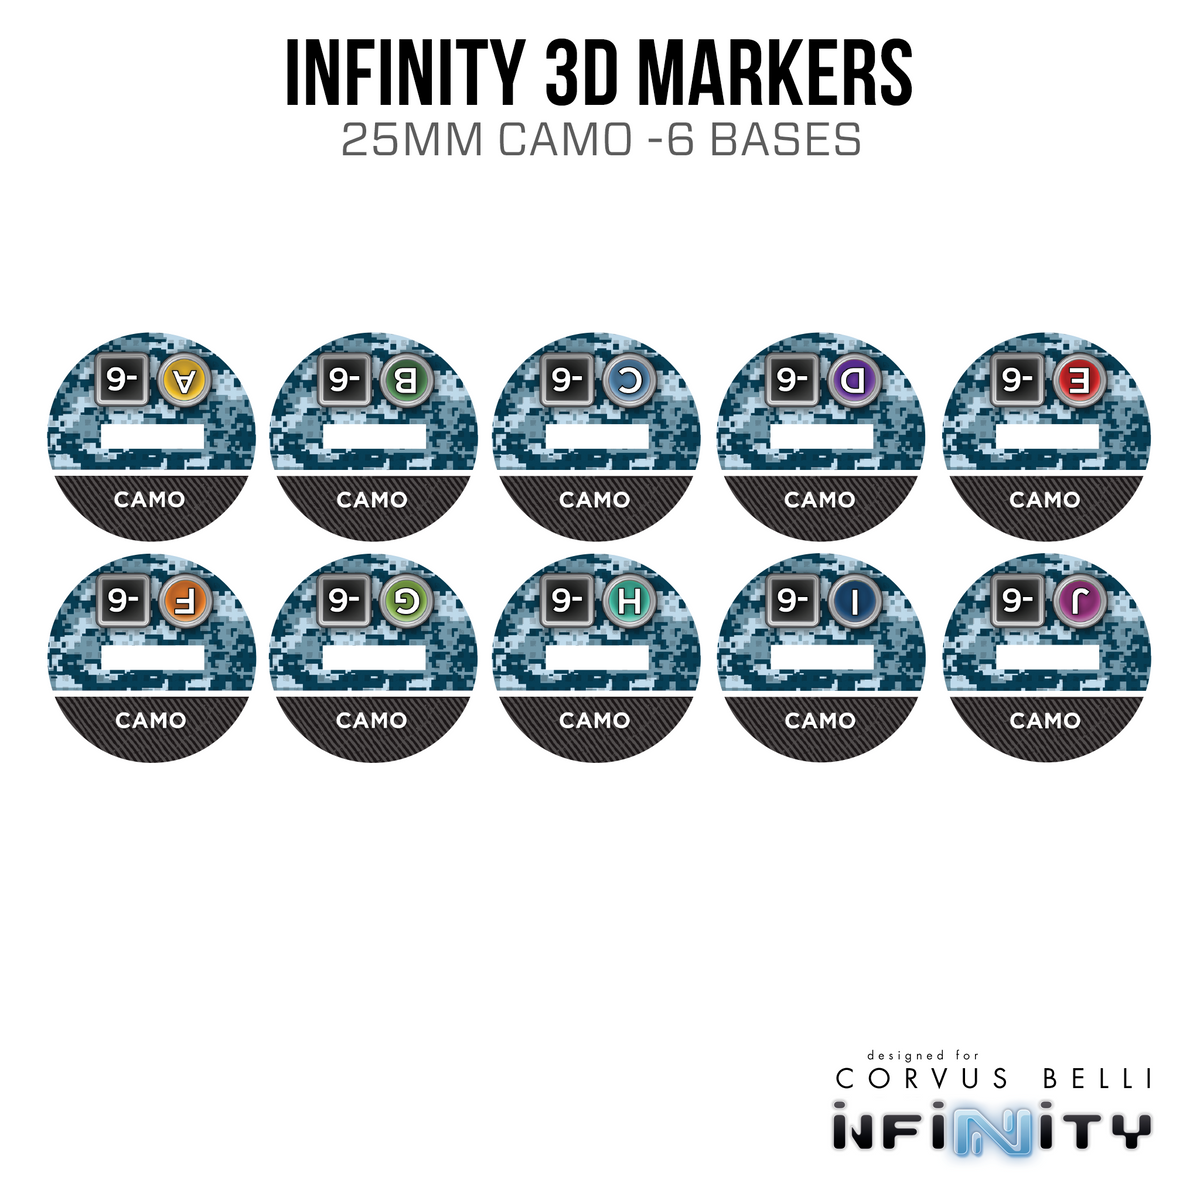 Infinity 3D Markers: Kunai Solutions Ninja (25mm Camo -6)